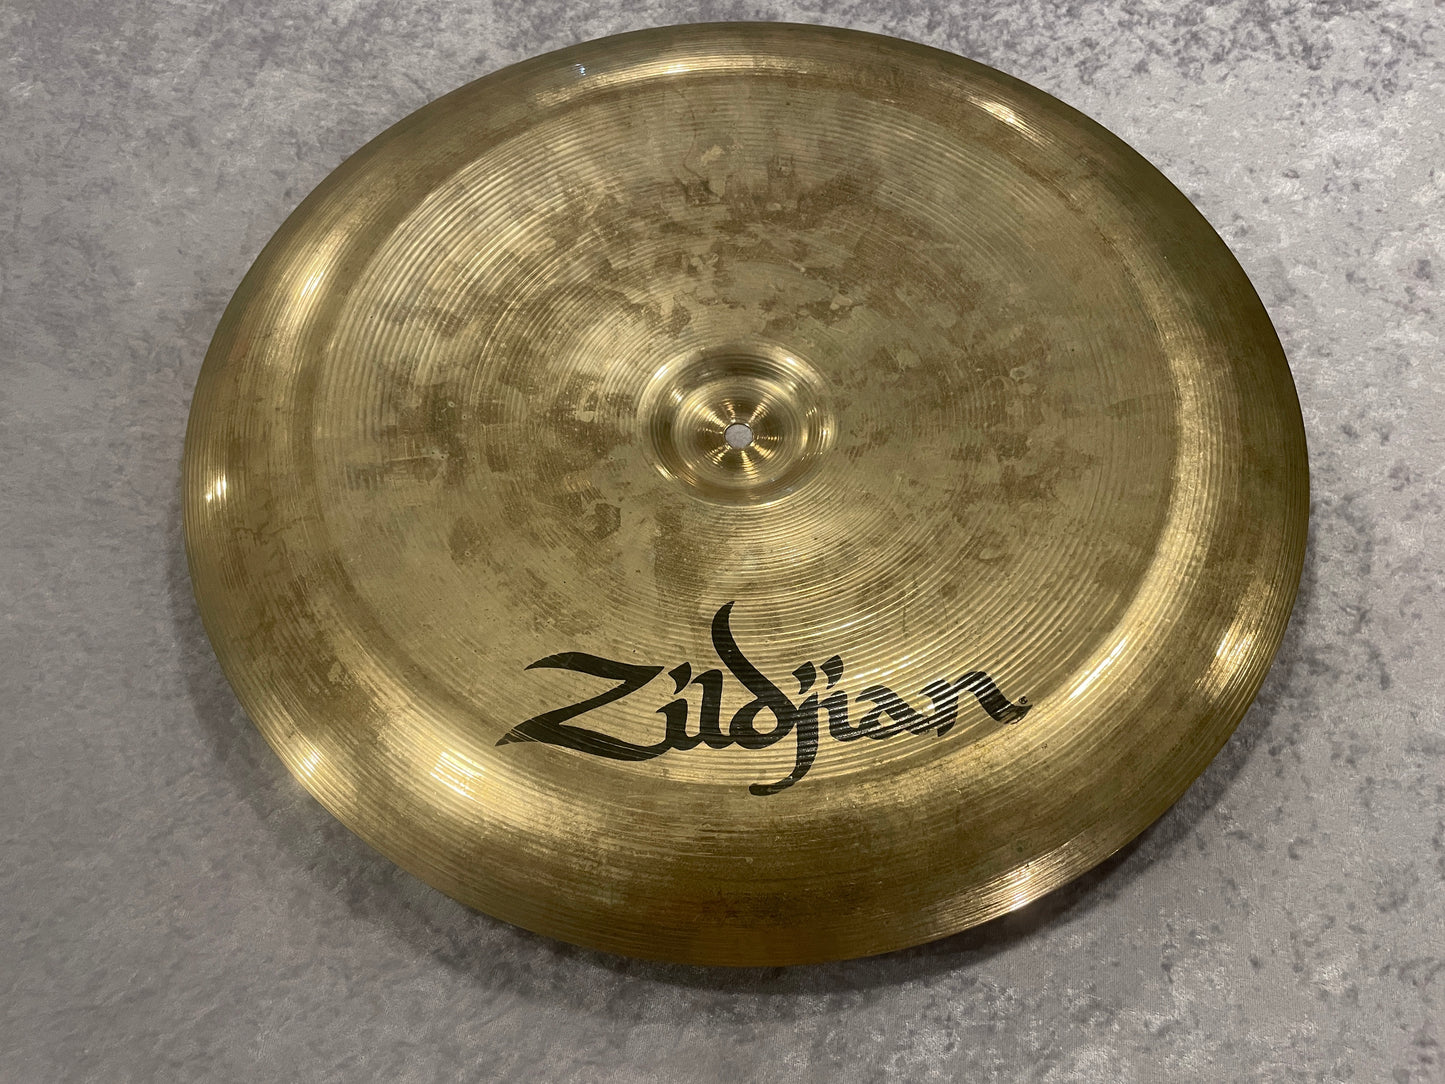 18" Zildjian A China High Cymbal Brilliant 1248g